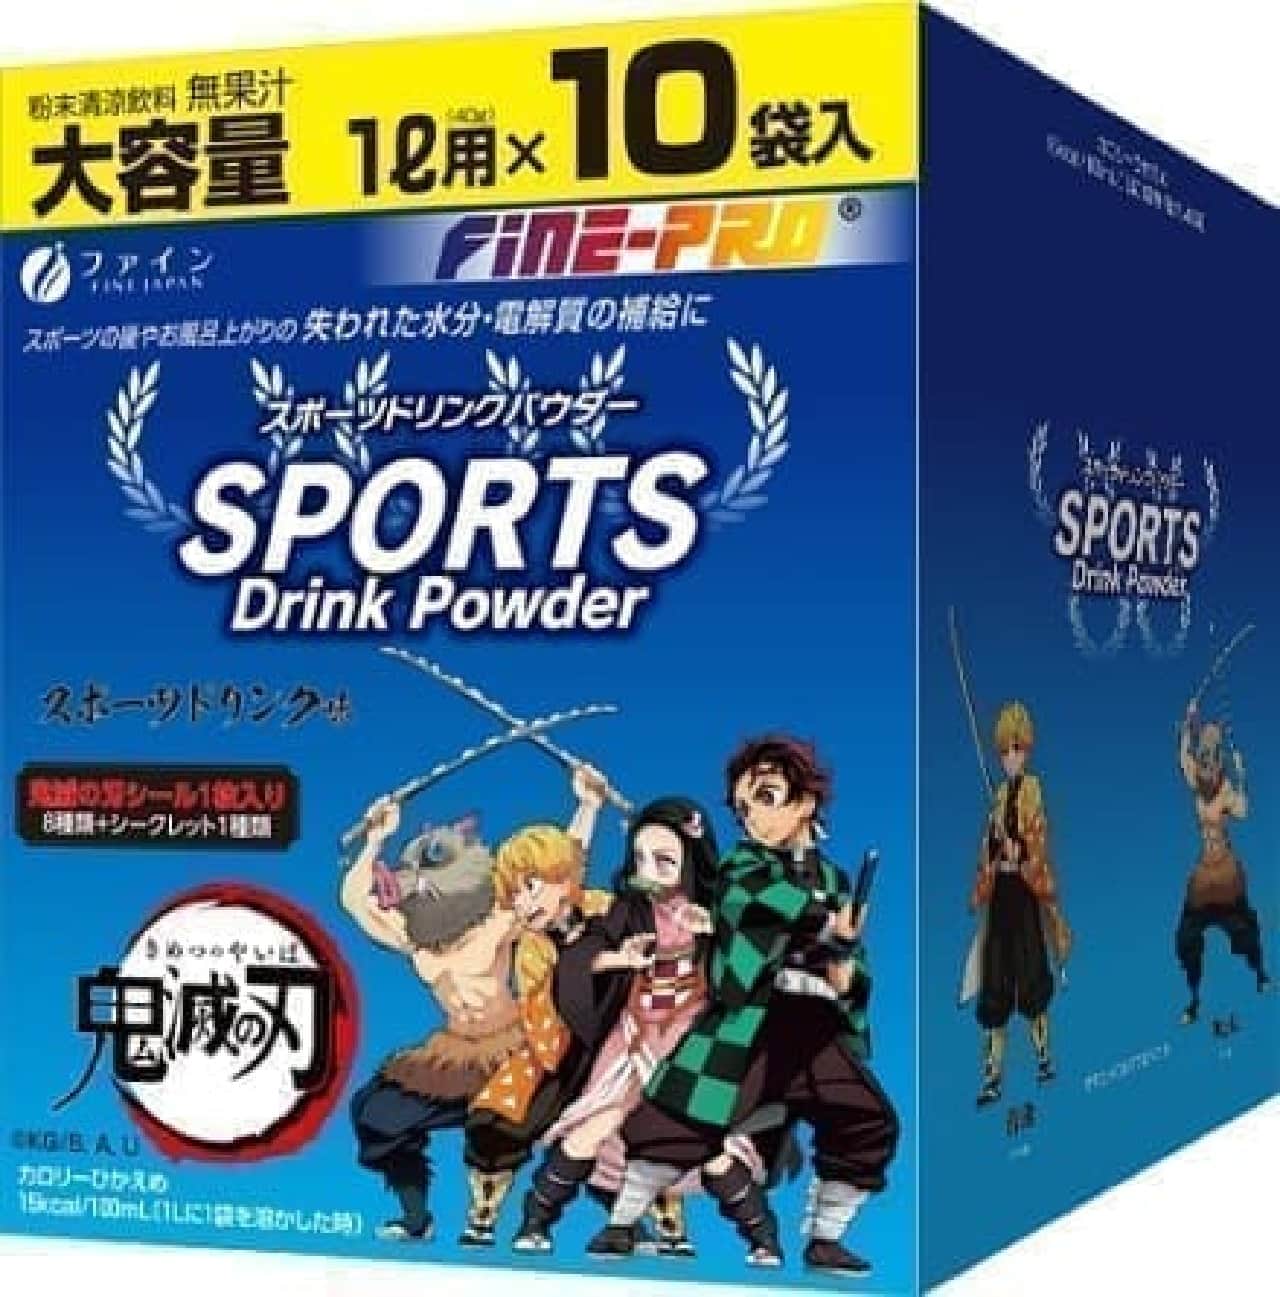 Sports drink powder (Demon Slayer)